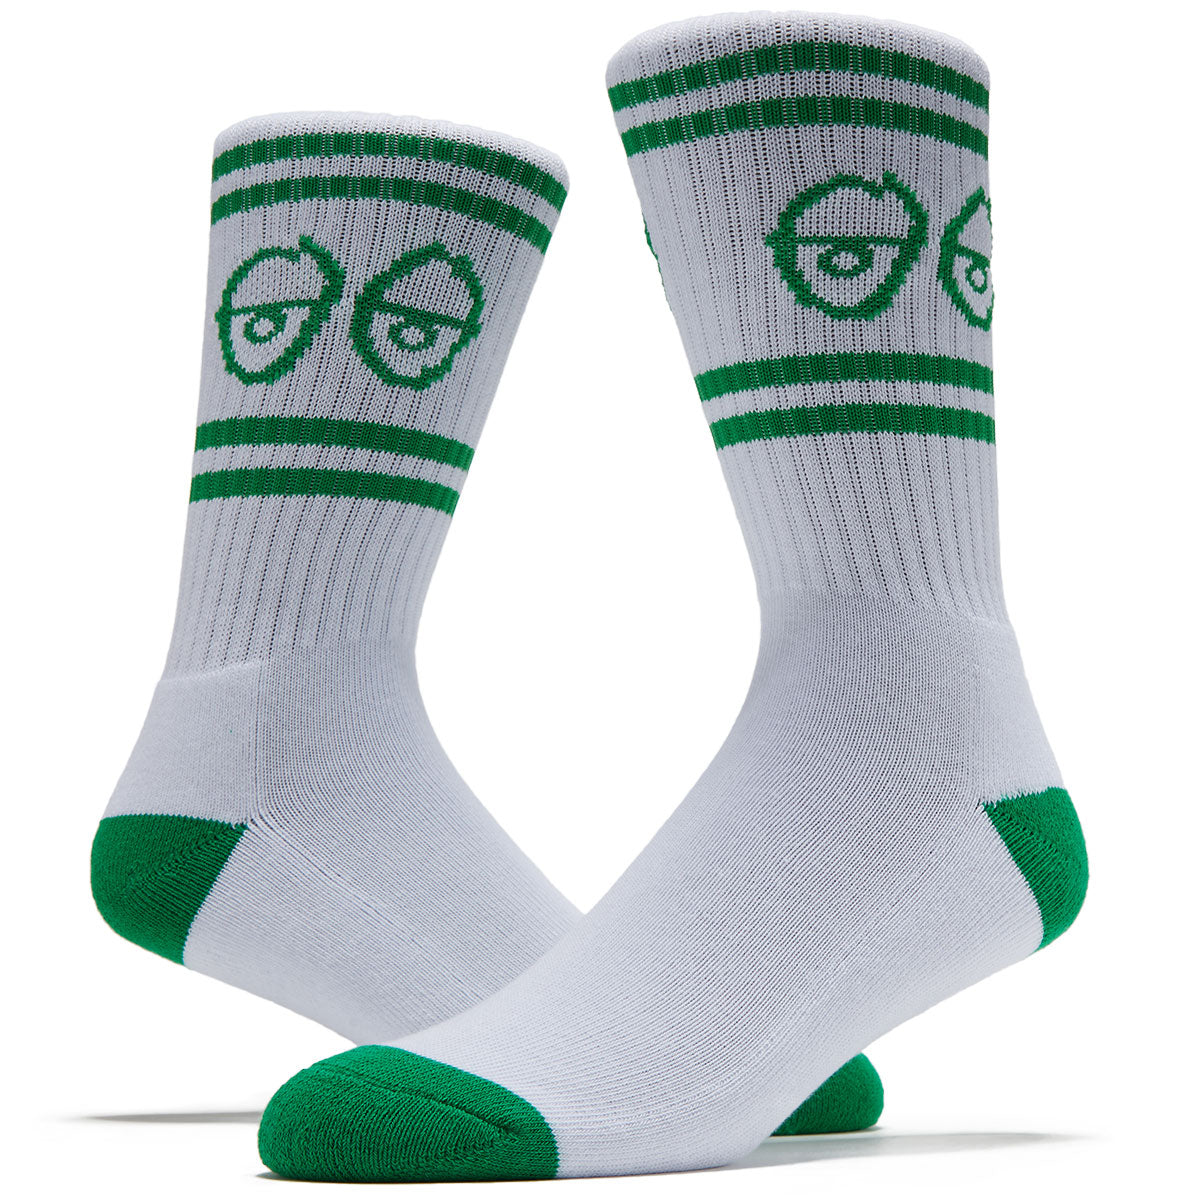 Krooked Eyes Socks - White/Green image 2